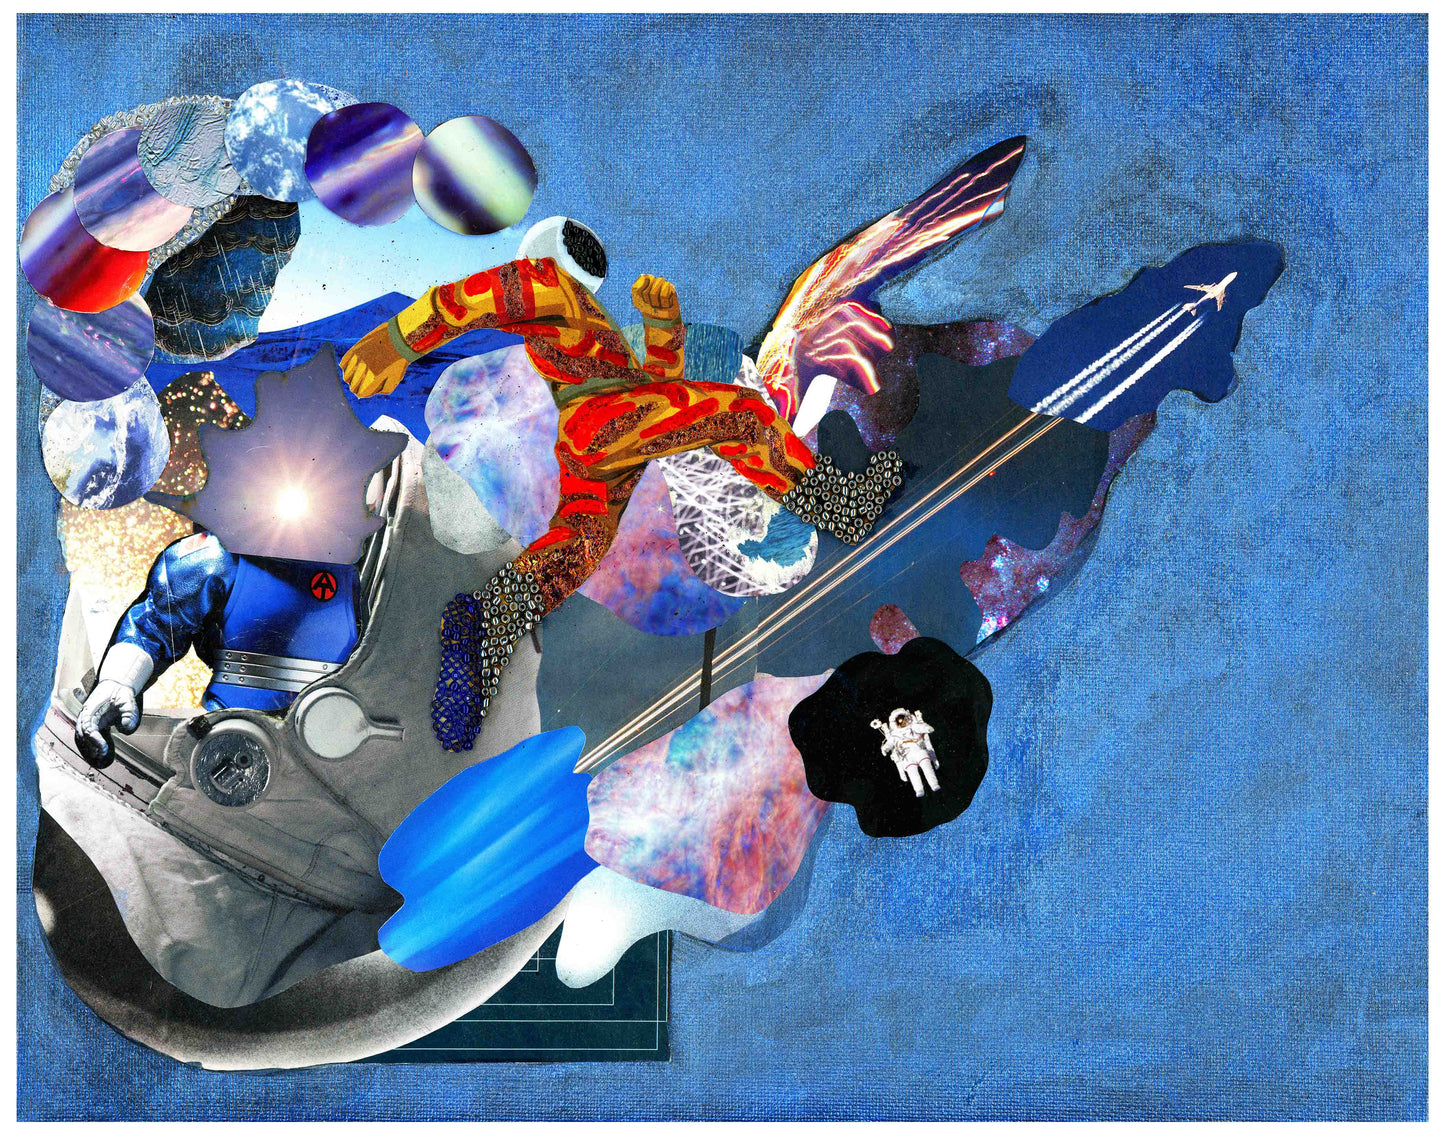 Astronaut LMC00101 Handmade collage-mixed media; landscape PRINT